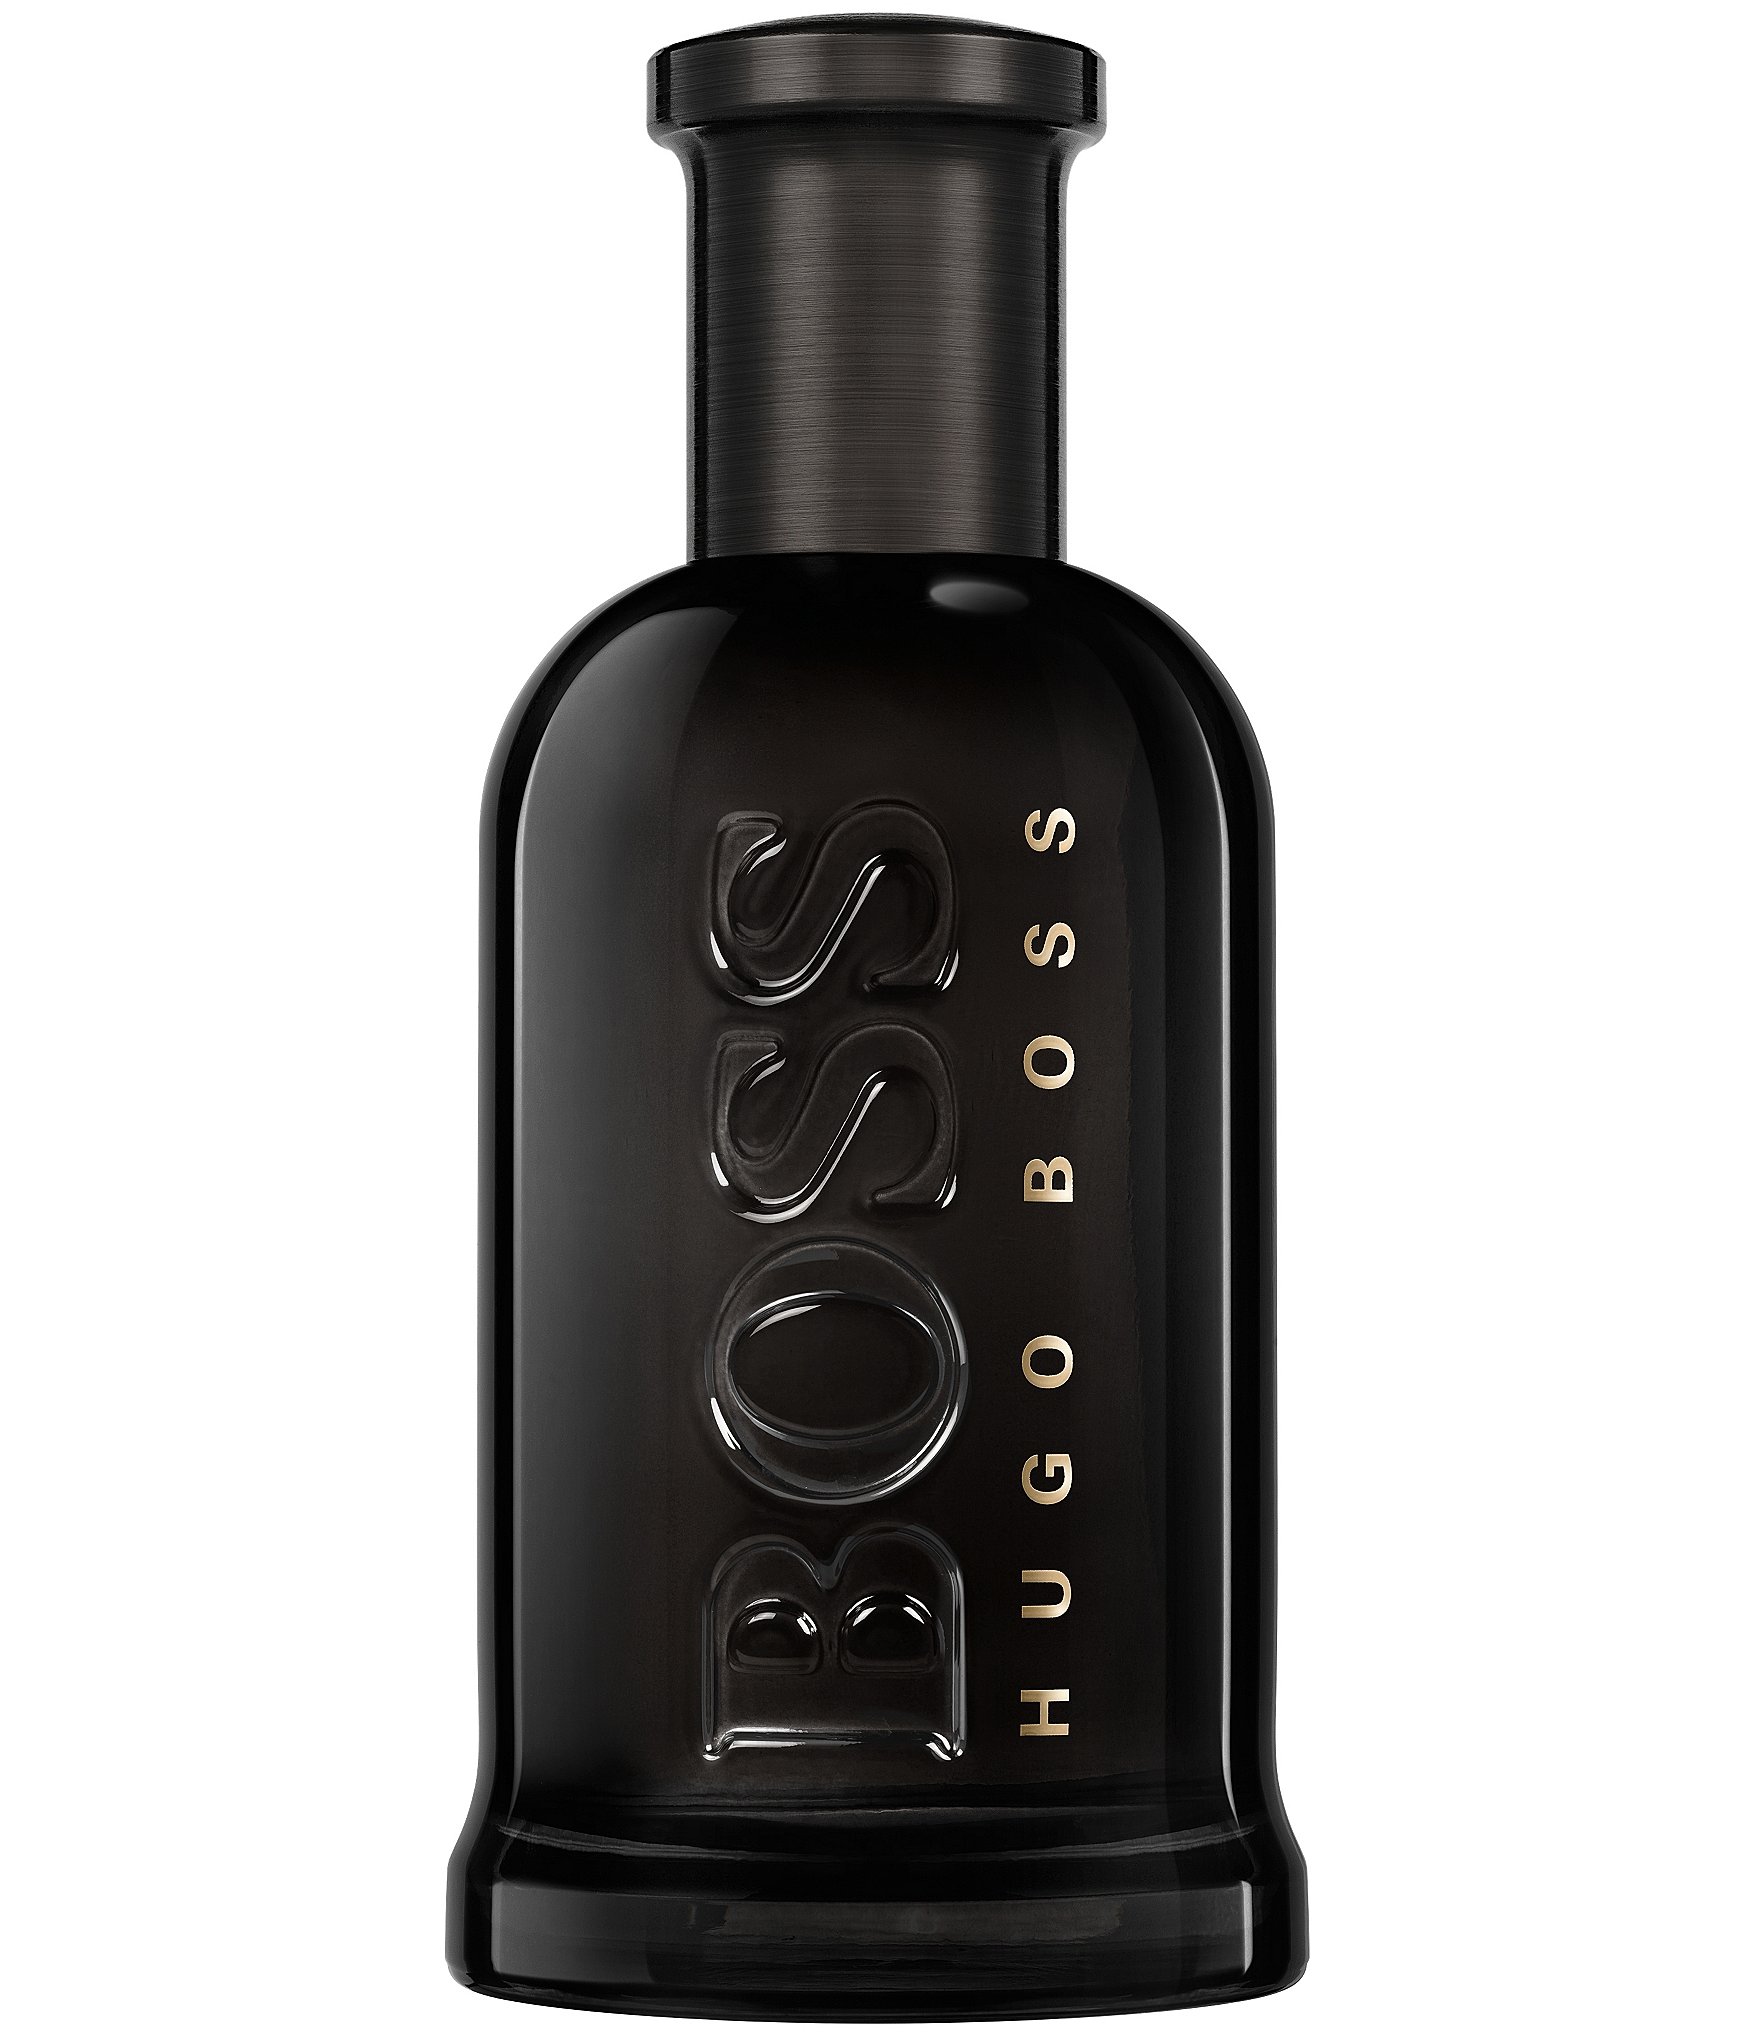 Valor Do Perfume Hugo Boss Clearance | website.jkuat.ac.ke